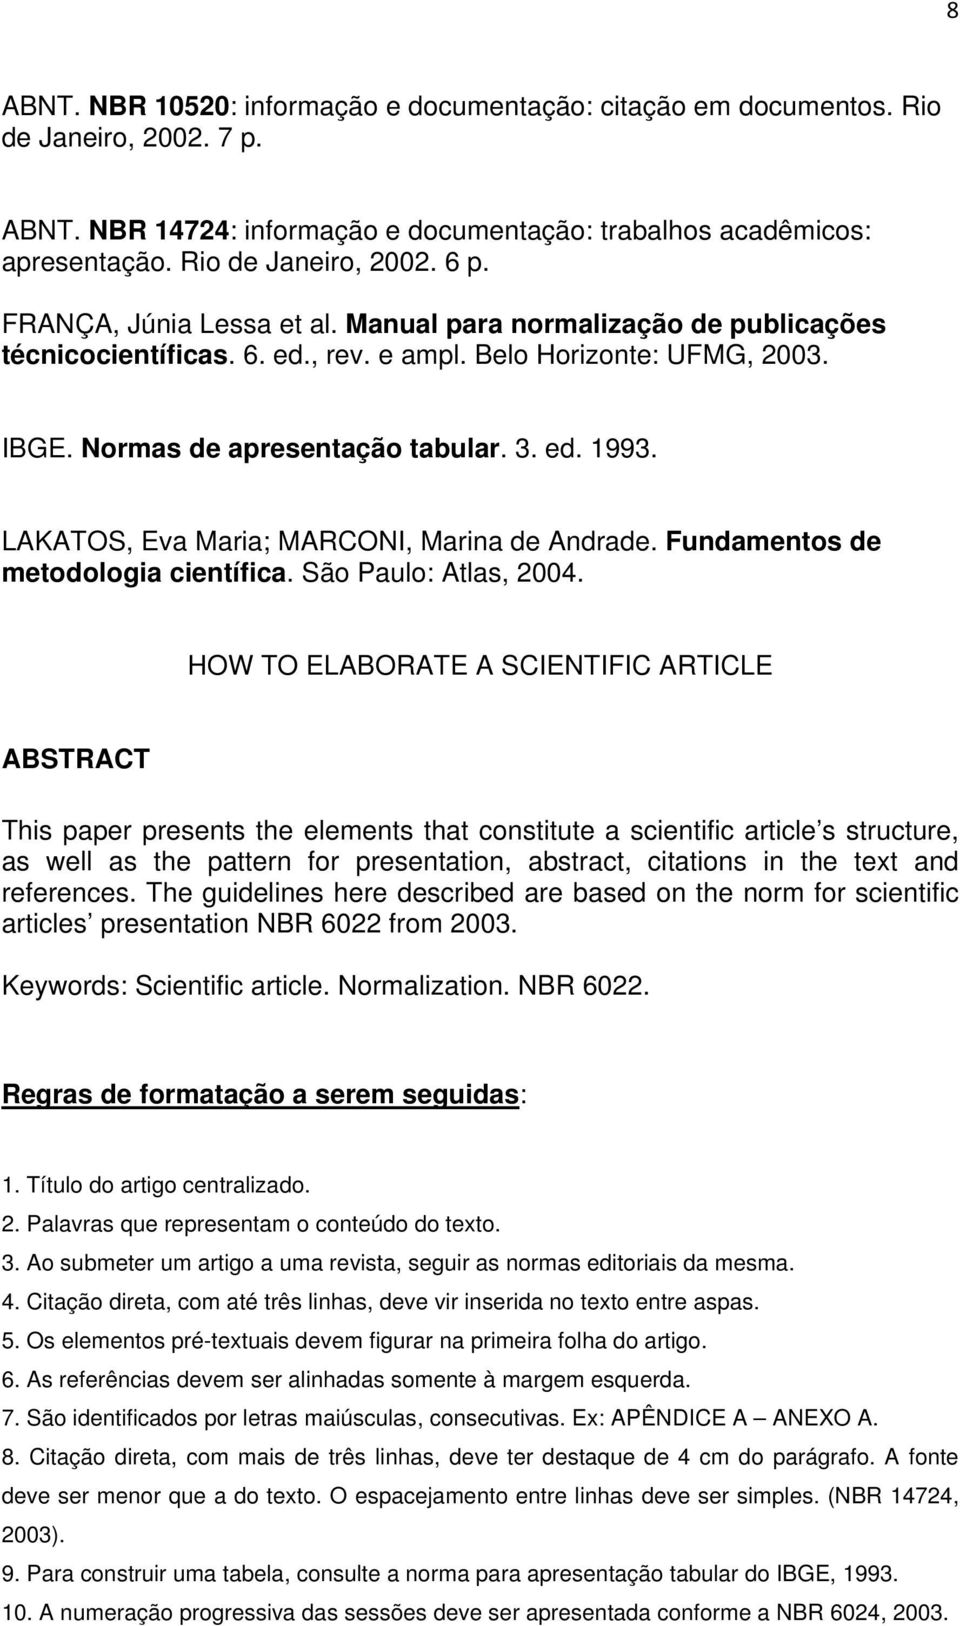 LAKATOS, Eva Maria; MARCONI, Marina de Andrade. Fundamentos de metodologia científica. São Paulo: Atlas, 2004.